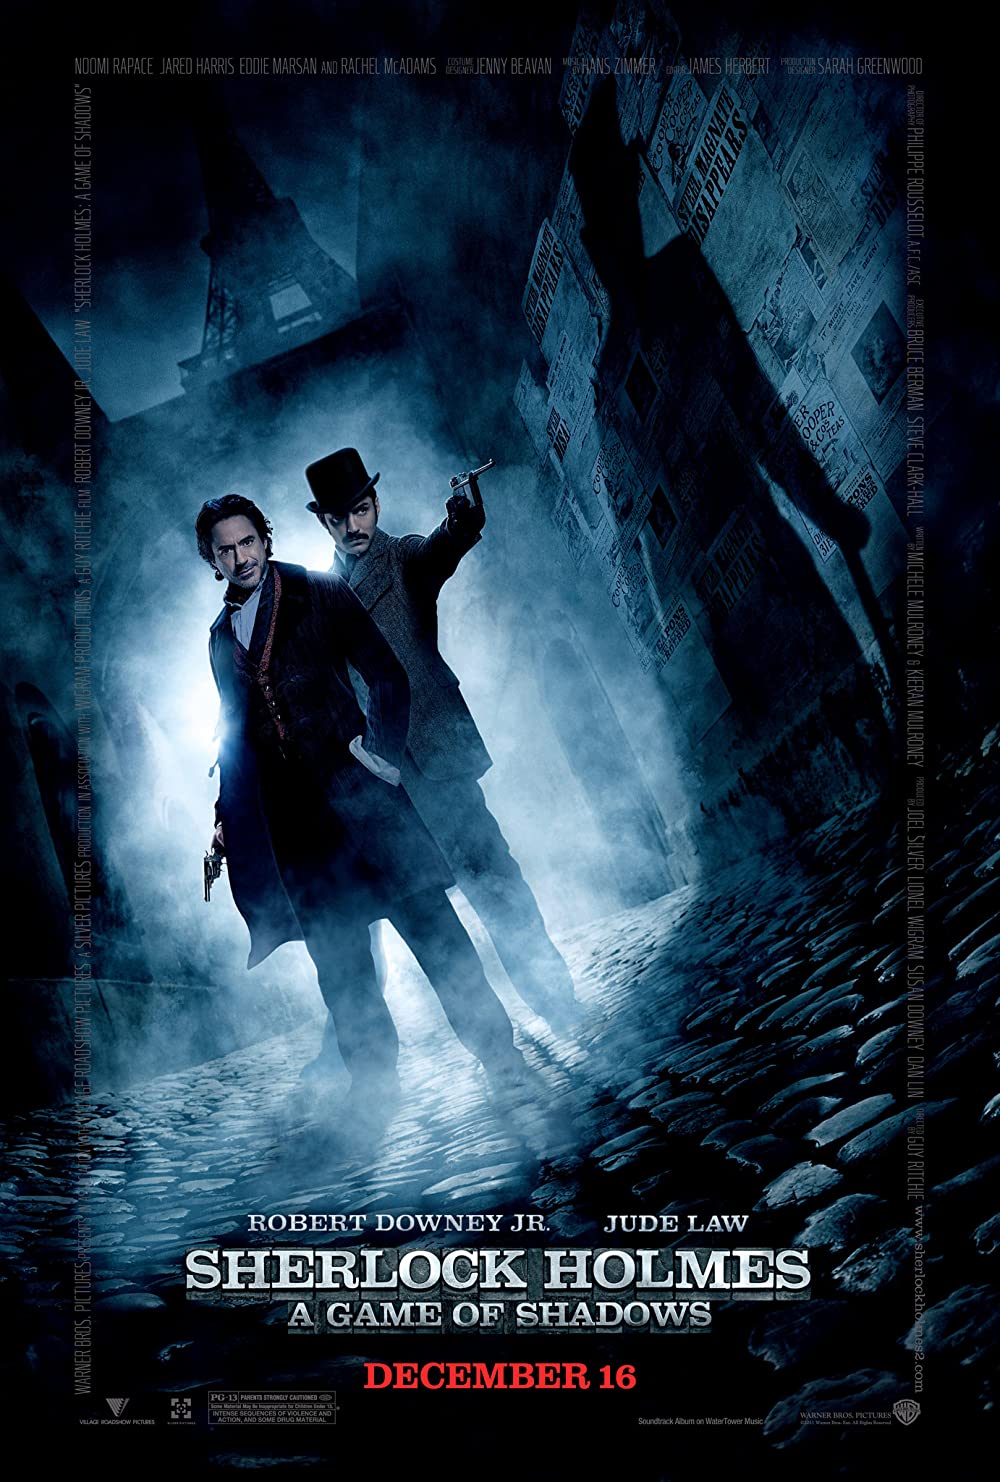 Sherlock Holmes A Game of Shadows เชอร์ล็อค โฮล์มส์ เกมพญายมเงามรณะ (2011)